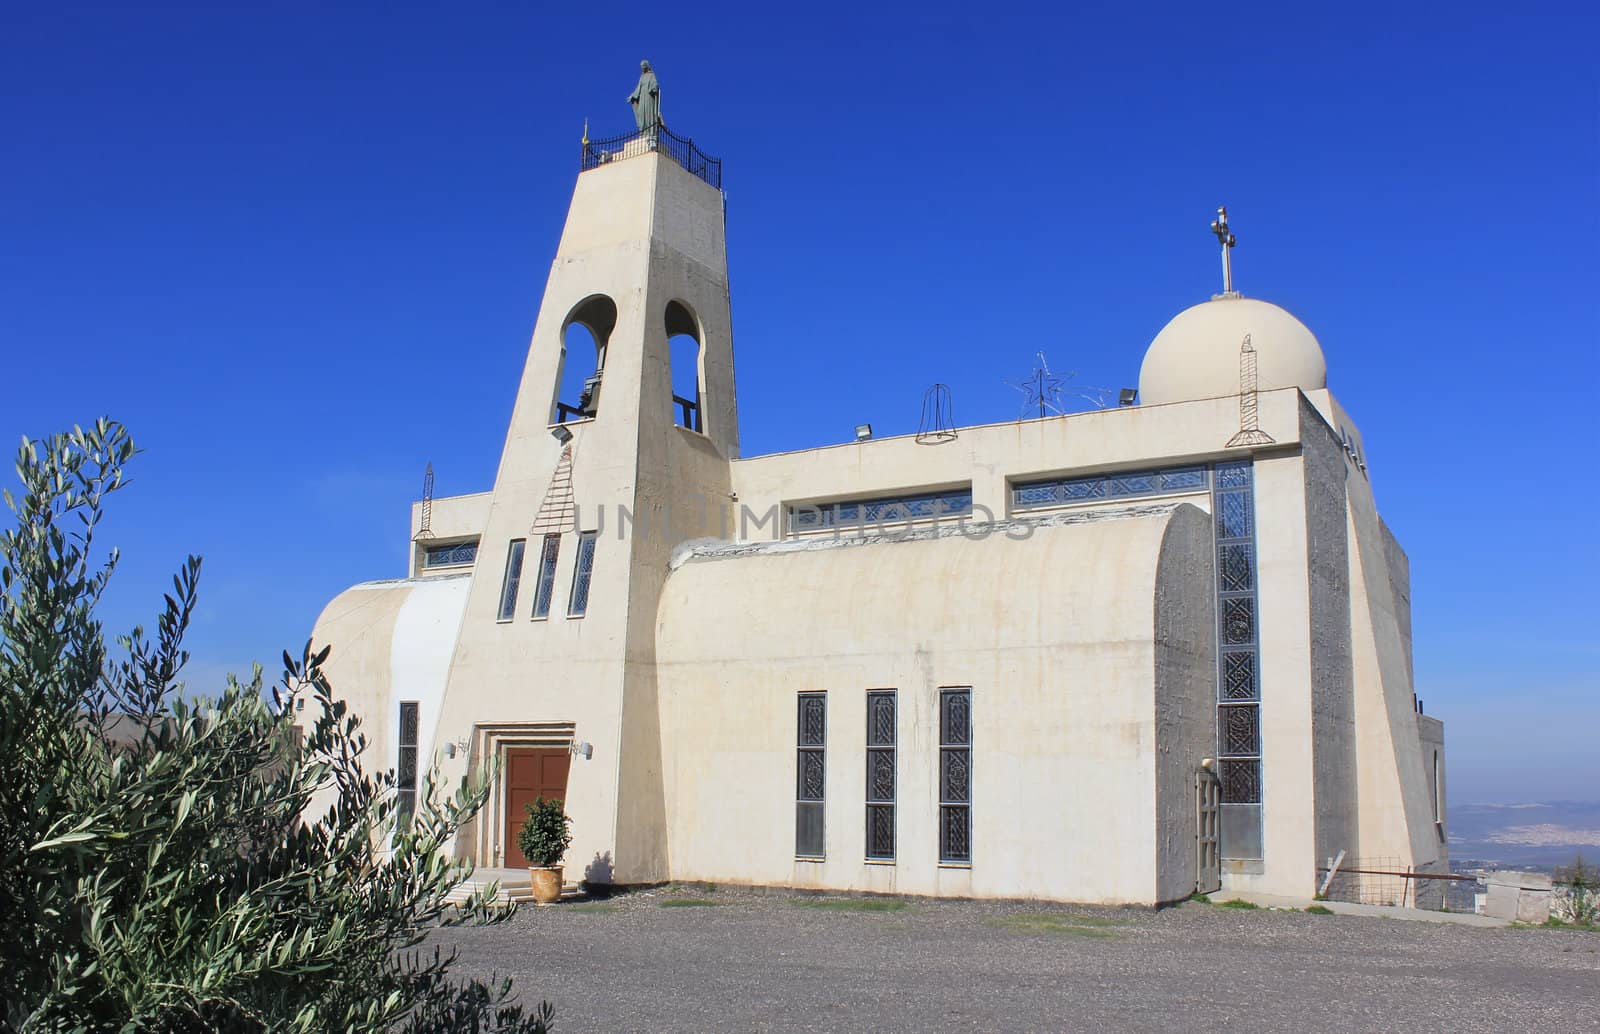 The New Maronite Church in Nazareth by irisphoto4